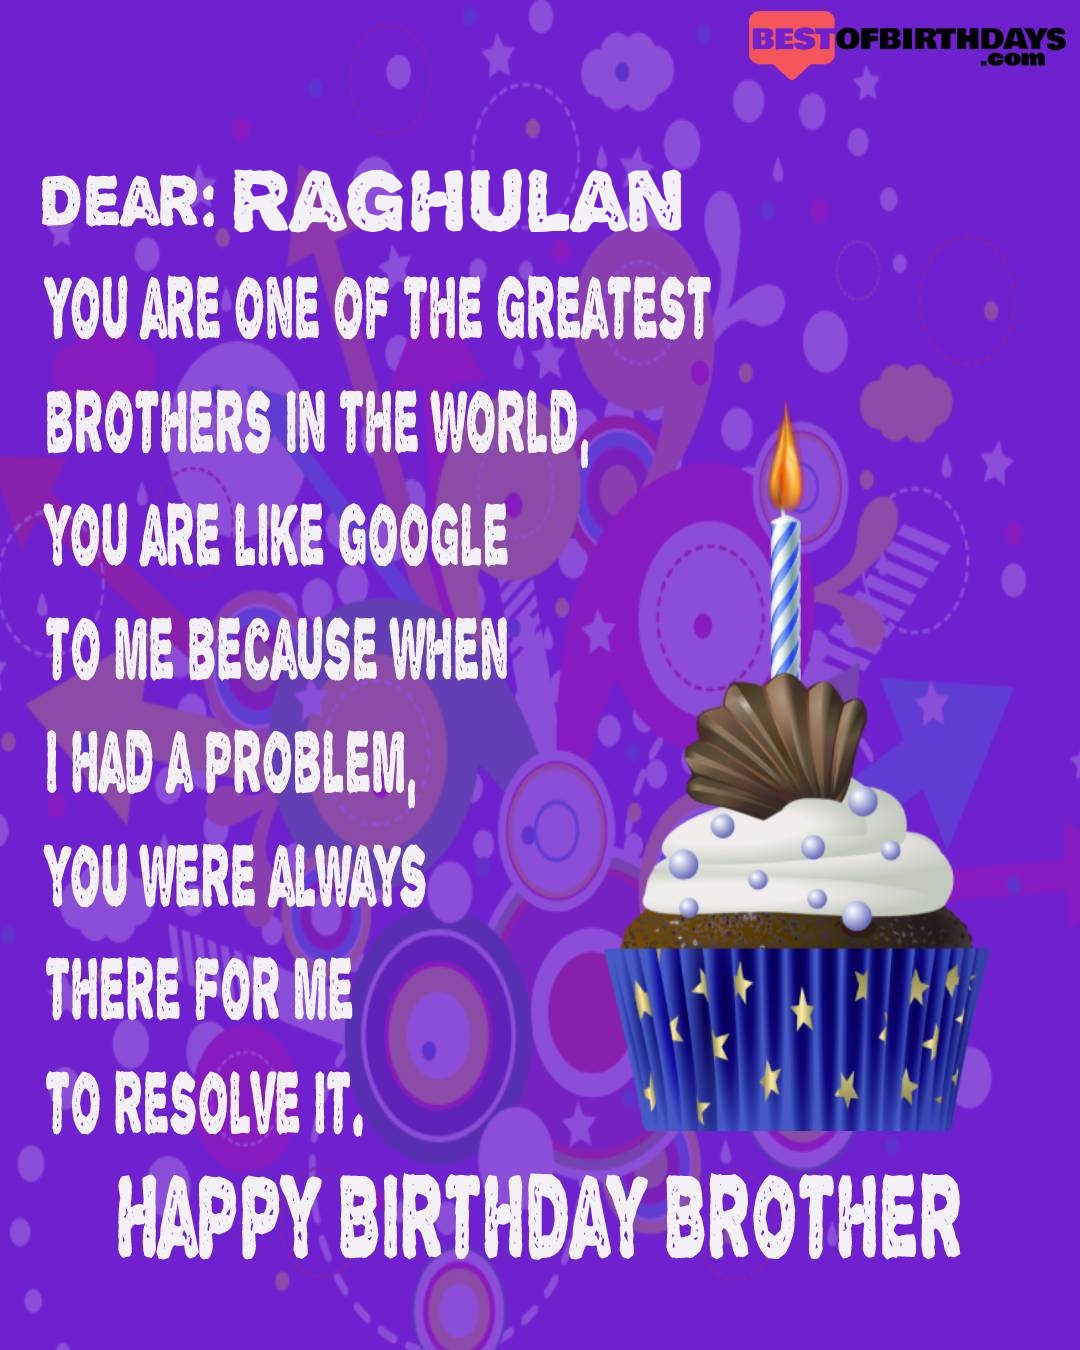 Happy birthday raghulan bhai brother bro